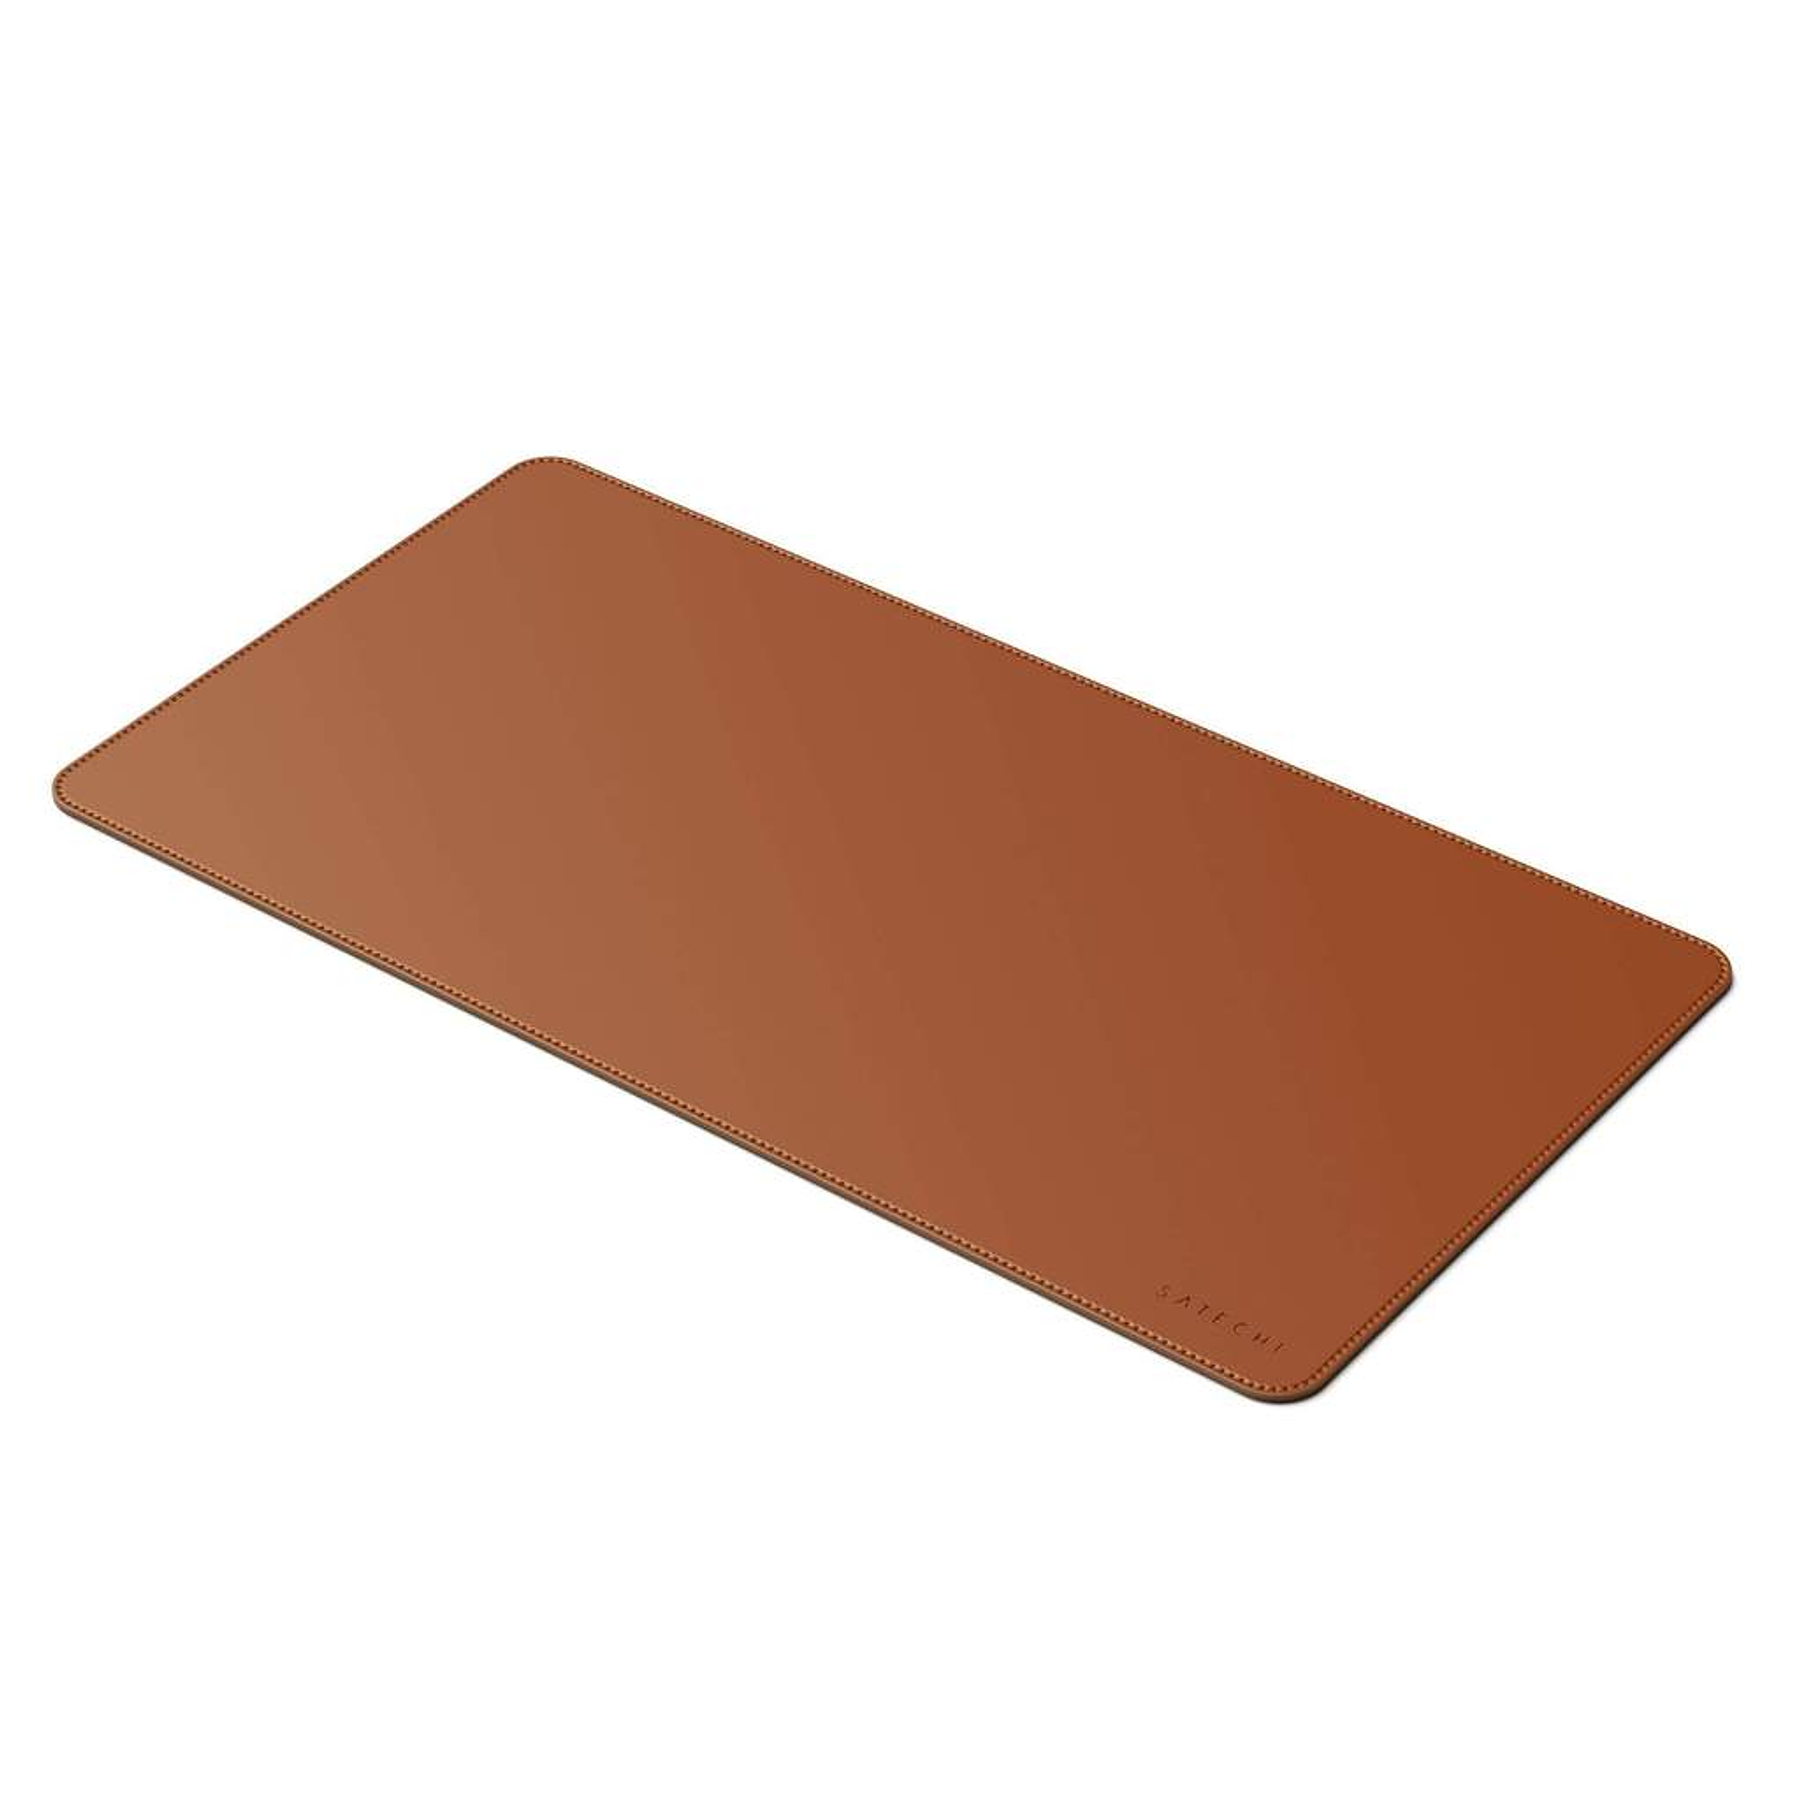 Satechi - Eco-Leather Deskmate (brown) 